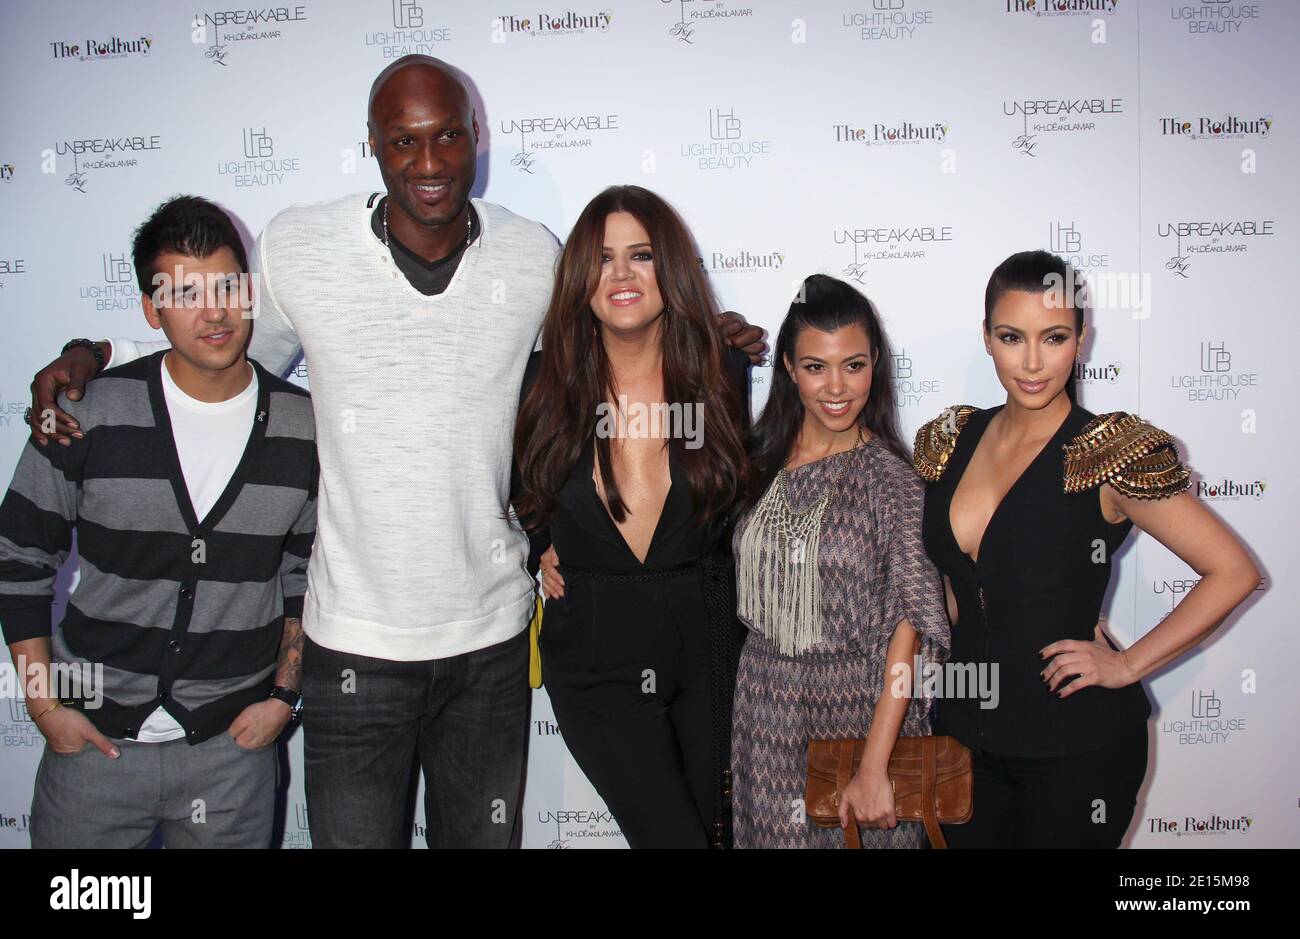 G-D) Rob Kardashian, Lamar Odom, Khloe Kardashian, Kourtney Kardashian et  Kim Kardashian lors des débuts de fragrance « incassable by Khloe and Lamar  » à l'hôtel Redbury à Hollywood, Los Angeles, CA,